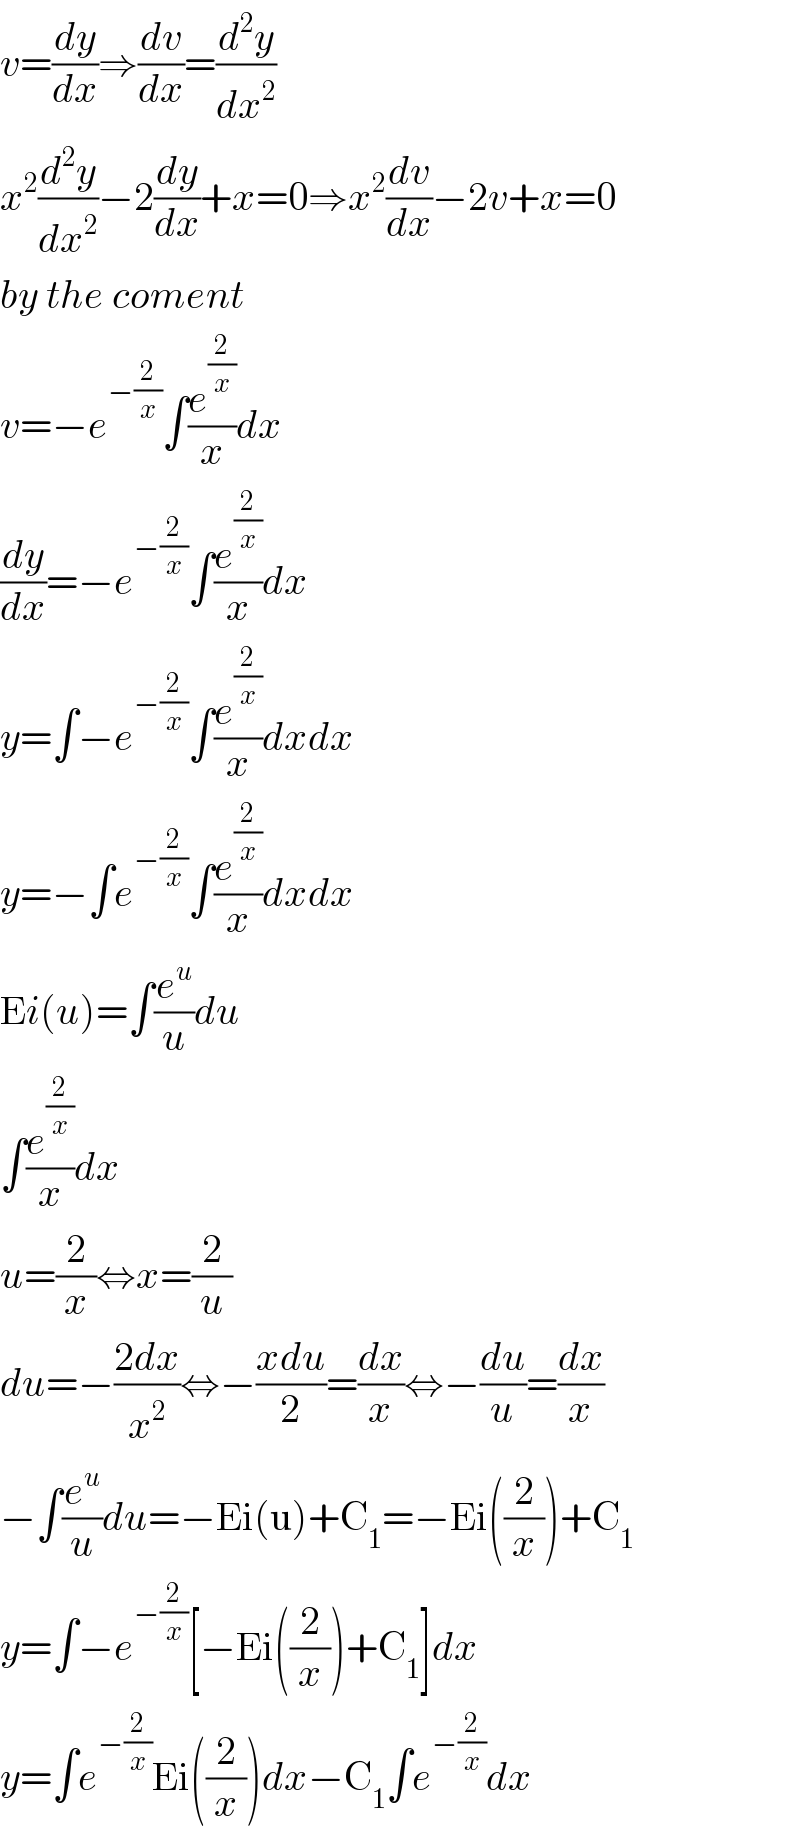 v=(dy/dx)⇒(dv/dx)=(d^2 y/dx^2 )  x^2 (d^2 y/dx^2 )−2(dy/dx)+x=0⇒x^2 (dv/dx)−2v+x=0  by the coment  v=−e^(−(2/x)) ∫(e^(2/x) /x)dx  (dy/dx)=−e^(−(2/x)) ∫(e^(2/x) /x)dx  y=∫−e^(−(2/x)) ∫(e^(2/x) /x)dxdx  y=−∫e^(−(2/x)) ∫(e^(2/x) /x)dxdx  Ei(u)=∫(e^u /u)du  ∫(e^(2/x) /x)dx  u=(2/x)⇔x=(2/u)  du=−((2dx)/x^2 )⇔−((xdu)/2)=(dx/x)⇔−(du/u)=(dx/x)  −∫(e^u /u)du=−Ei(u)+C_1 =−Ei((2/x))+C_1   y=∫−e^(−(2/x)) [−Ei((2/x))+C_1 ]dx  y=∫e^(−(2/x)) Ei((2/x))dx−C_1 ∫e^(−(2/x)) dx  